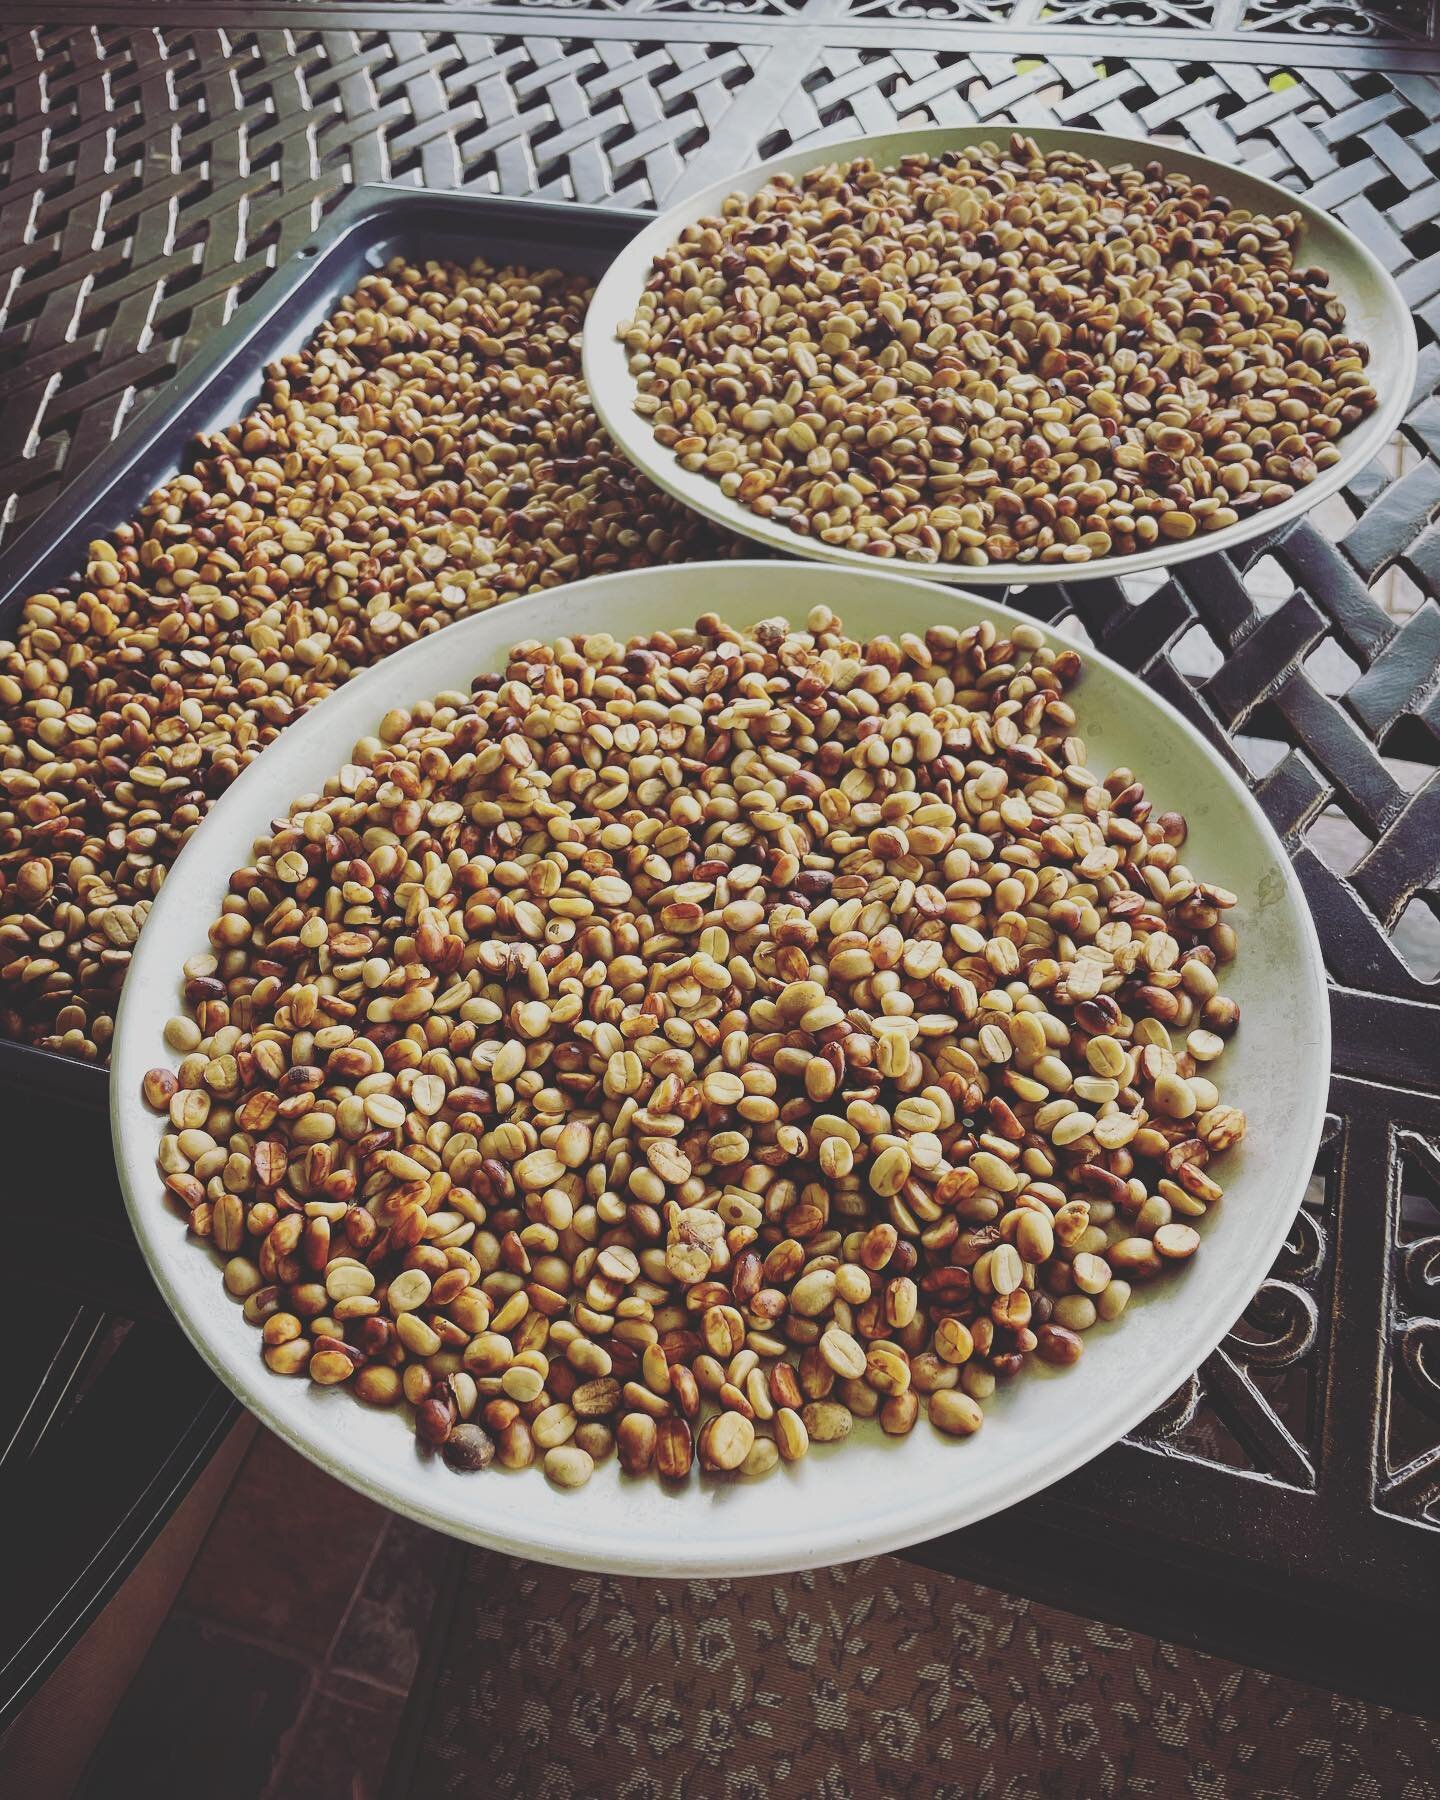 Coffee trees 🌳🌳got us starting up the drying process again! ☕️☕️☕️

#coffeebeans #dryingrack #dryingoutinthesun #coffeetime #growyourown #localfarms #upcountrymaui